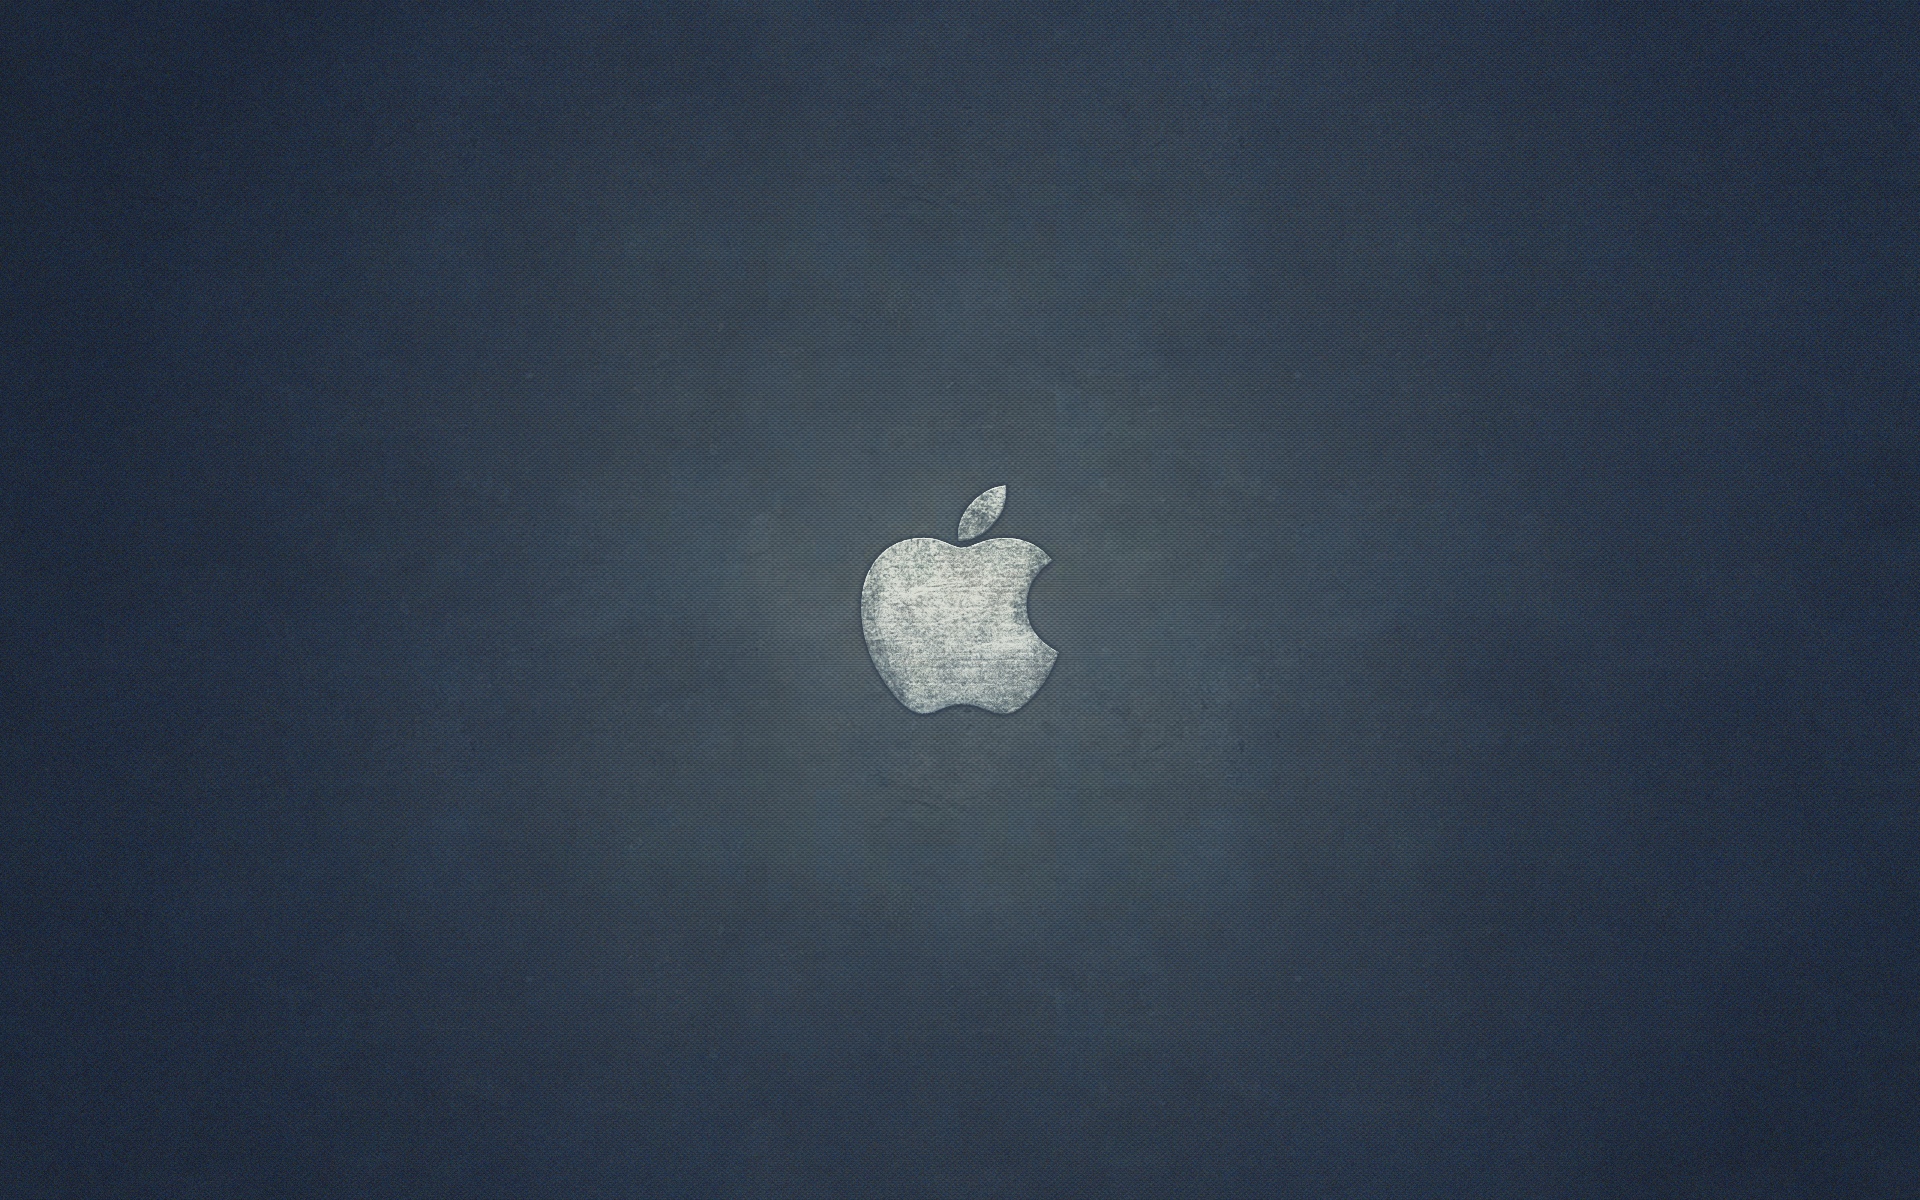 Apple Inc., technology, logos - desktop wallpaper